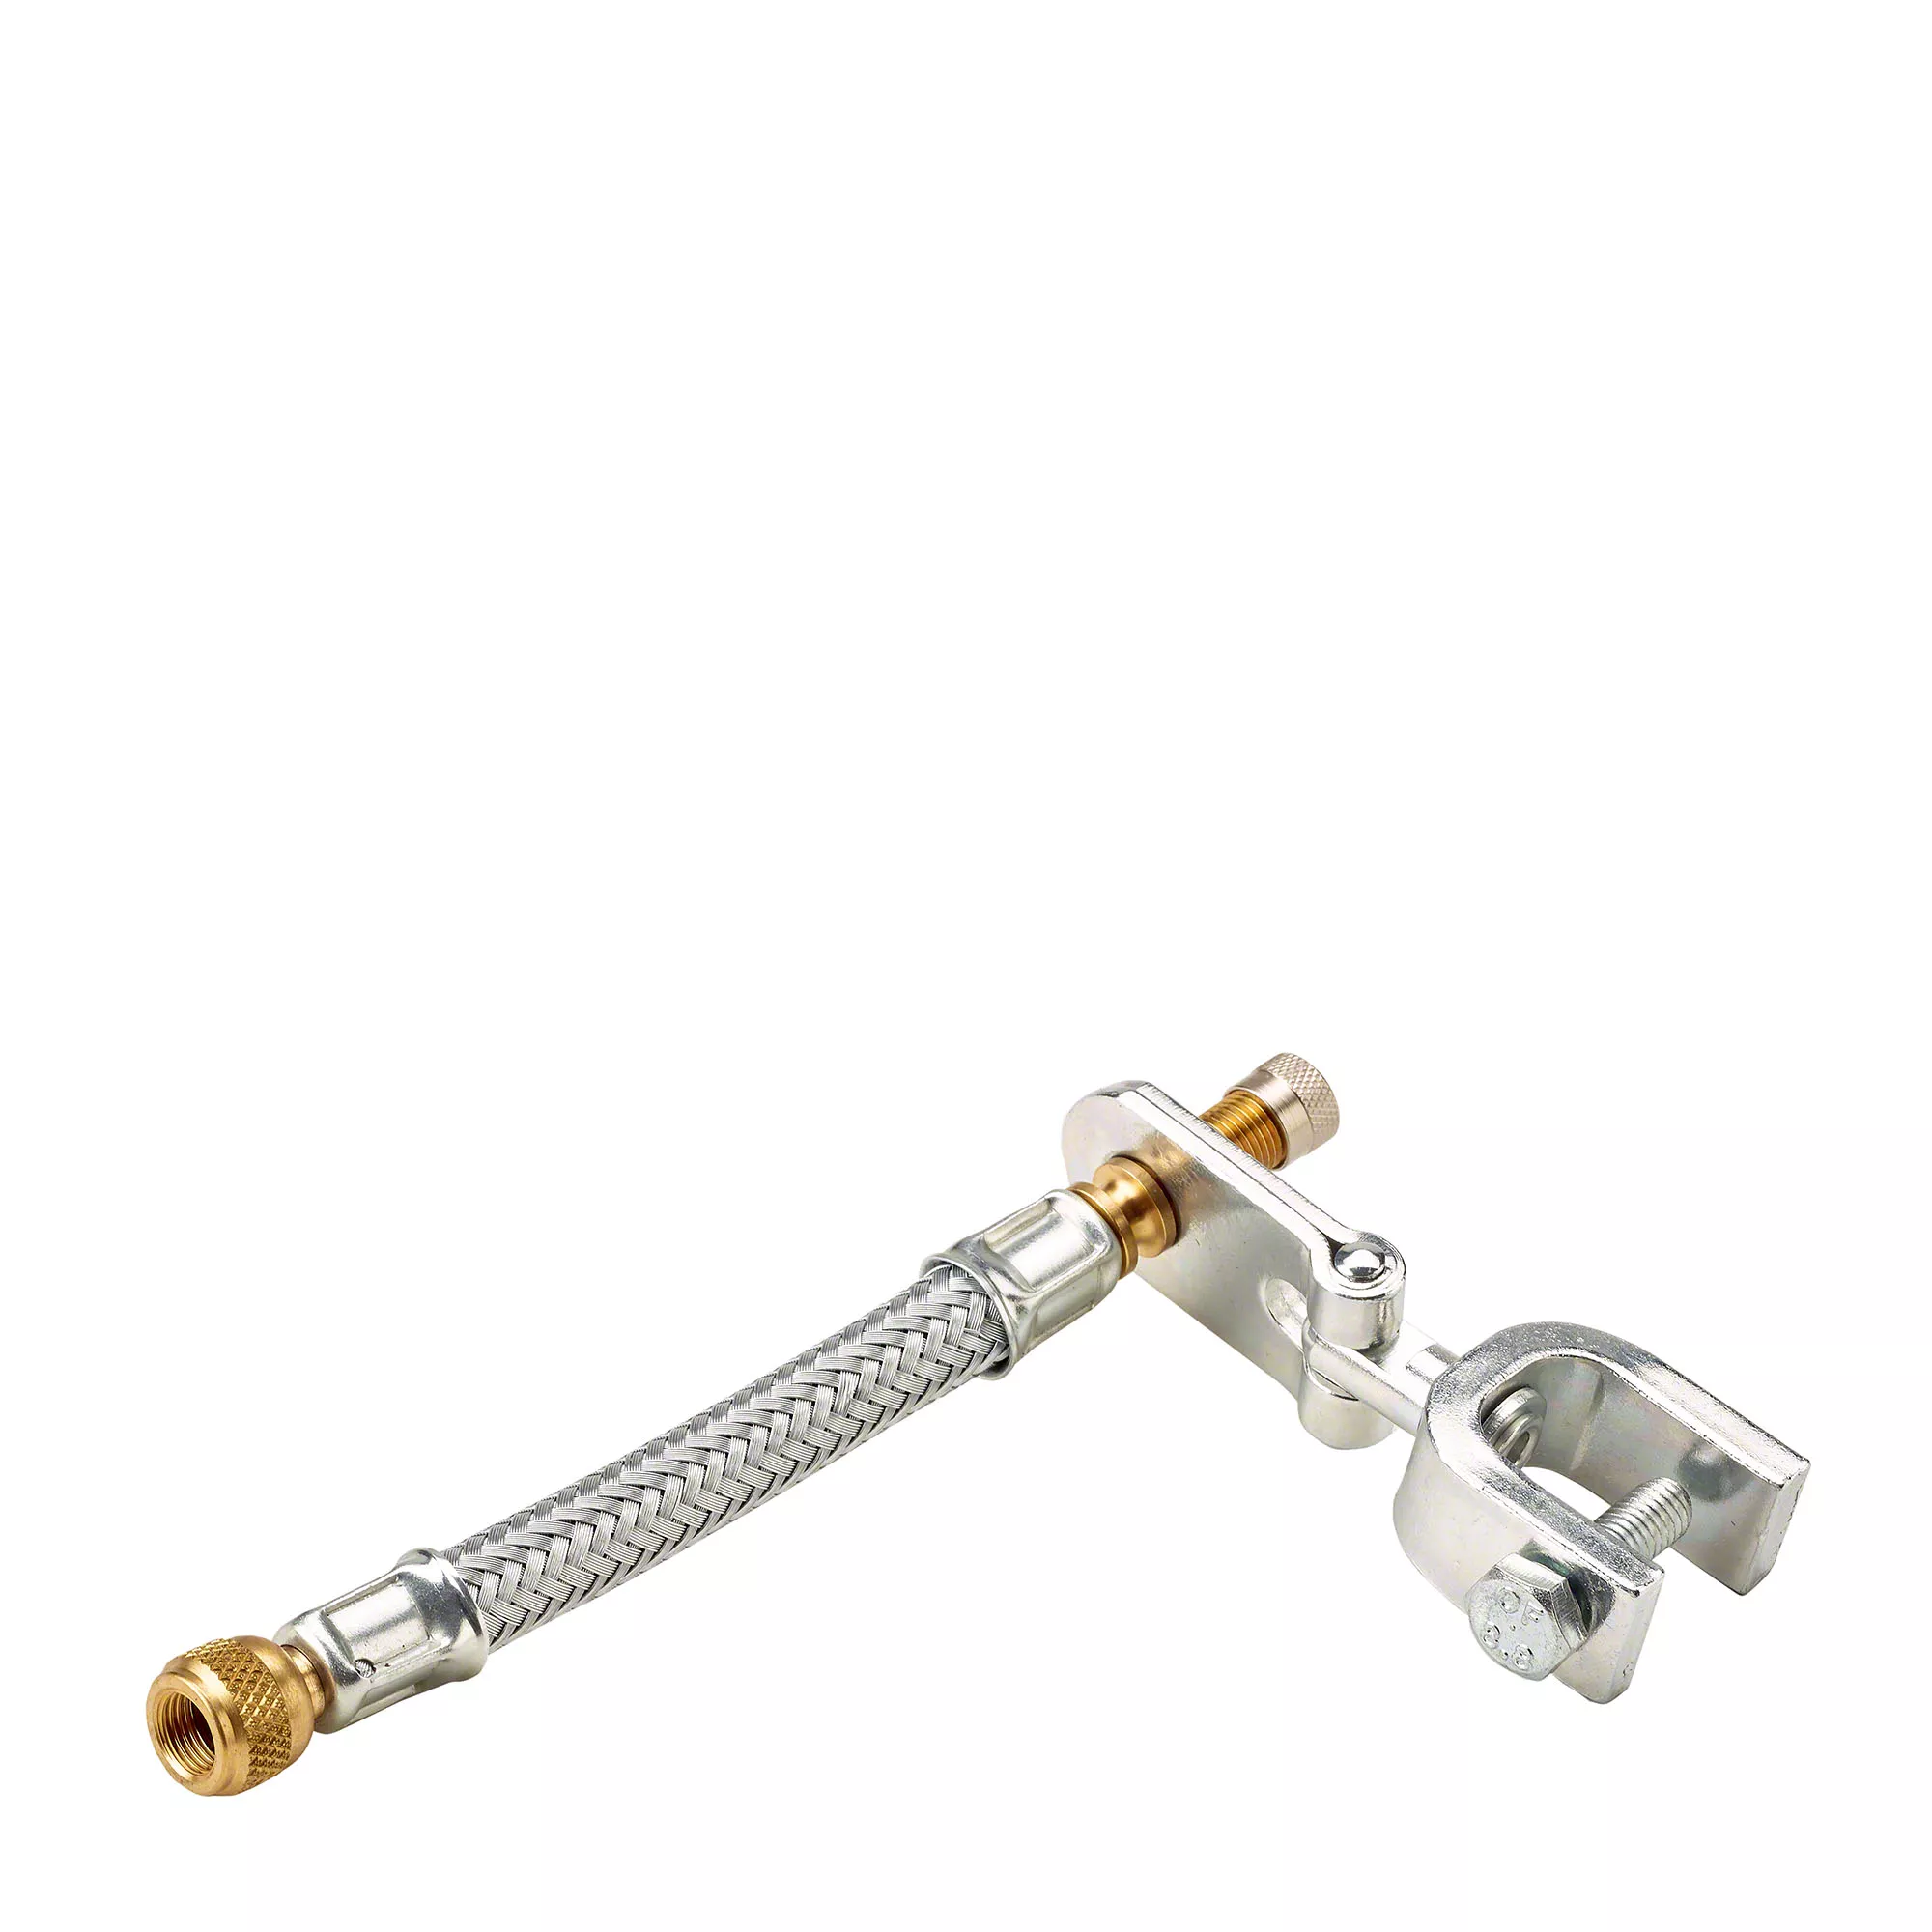 Valve extension - 119 mm, swivel clamp